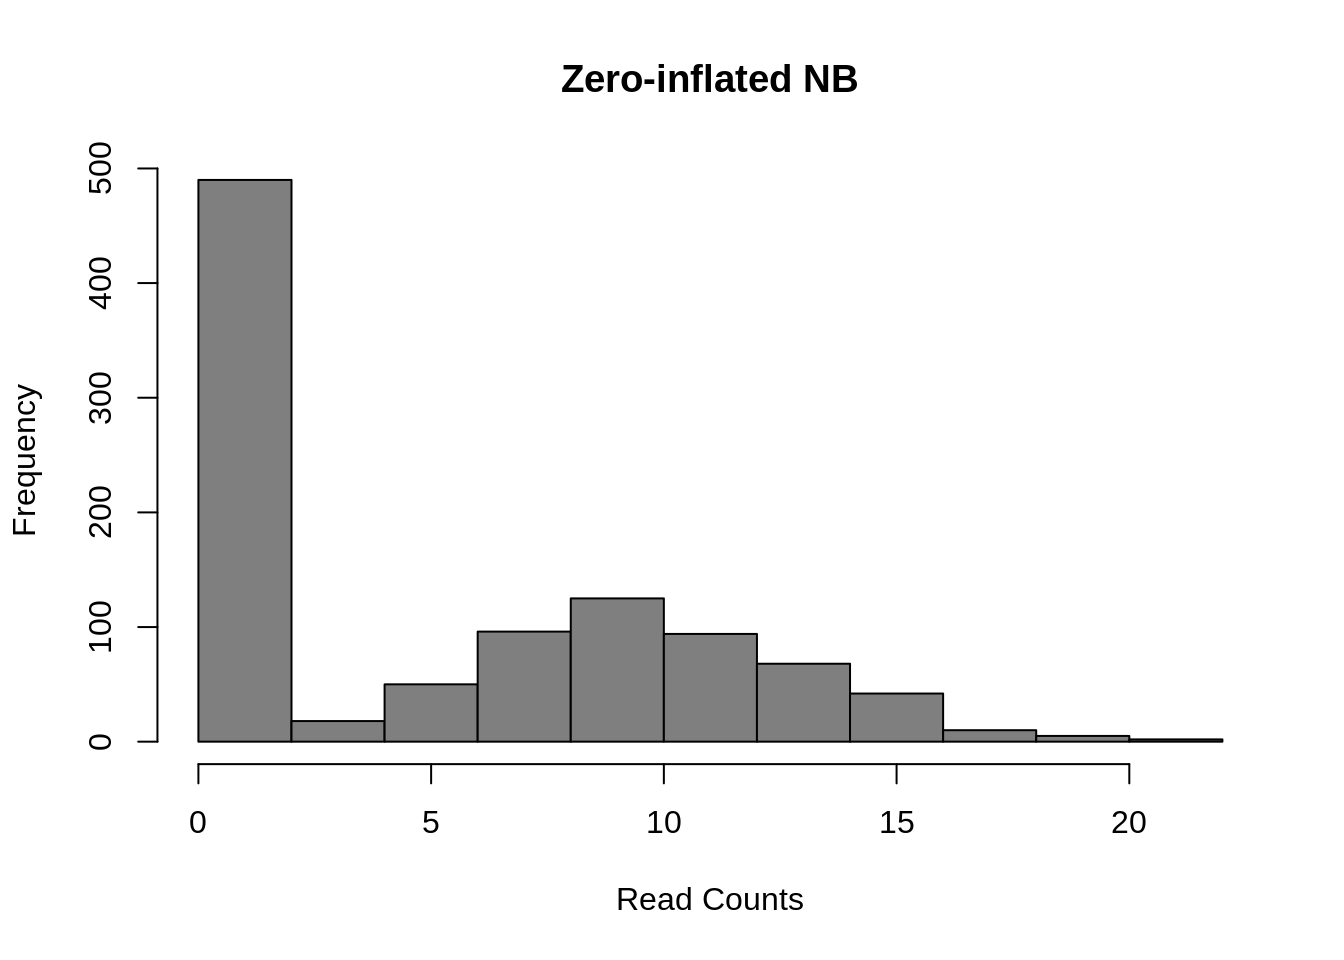 Zero-inflated Negative Binomial distribution